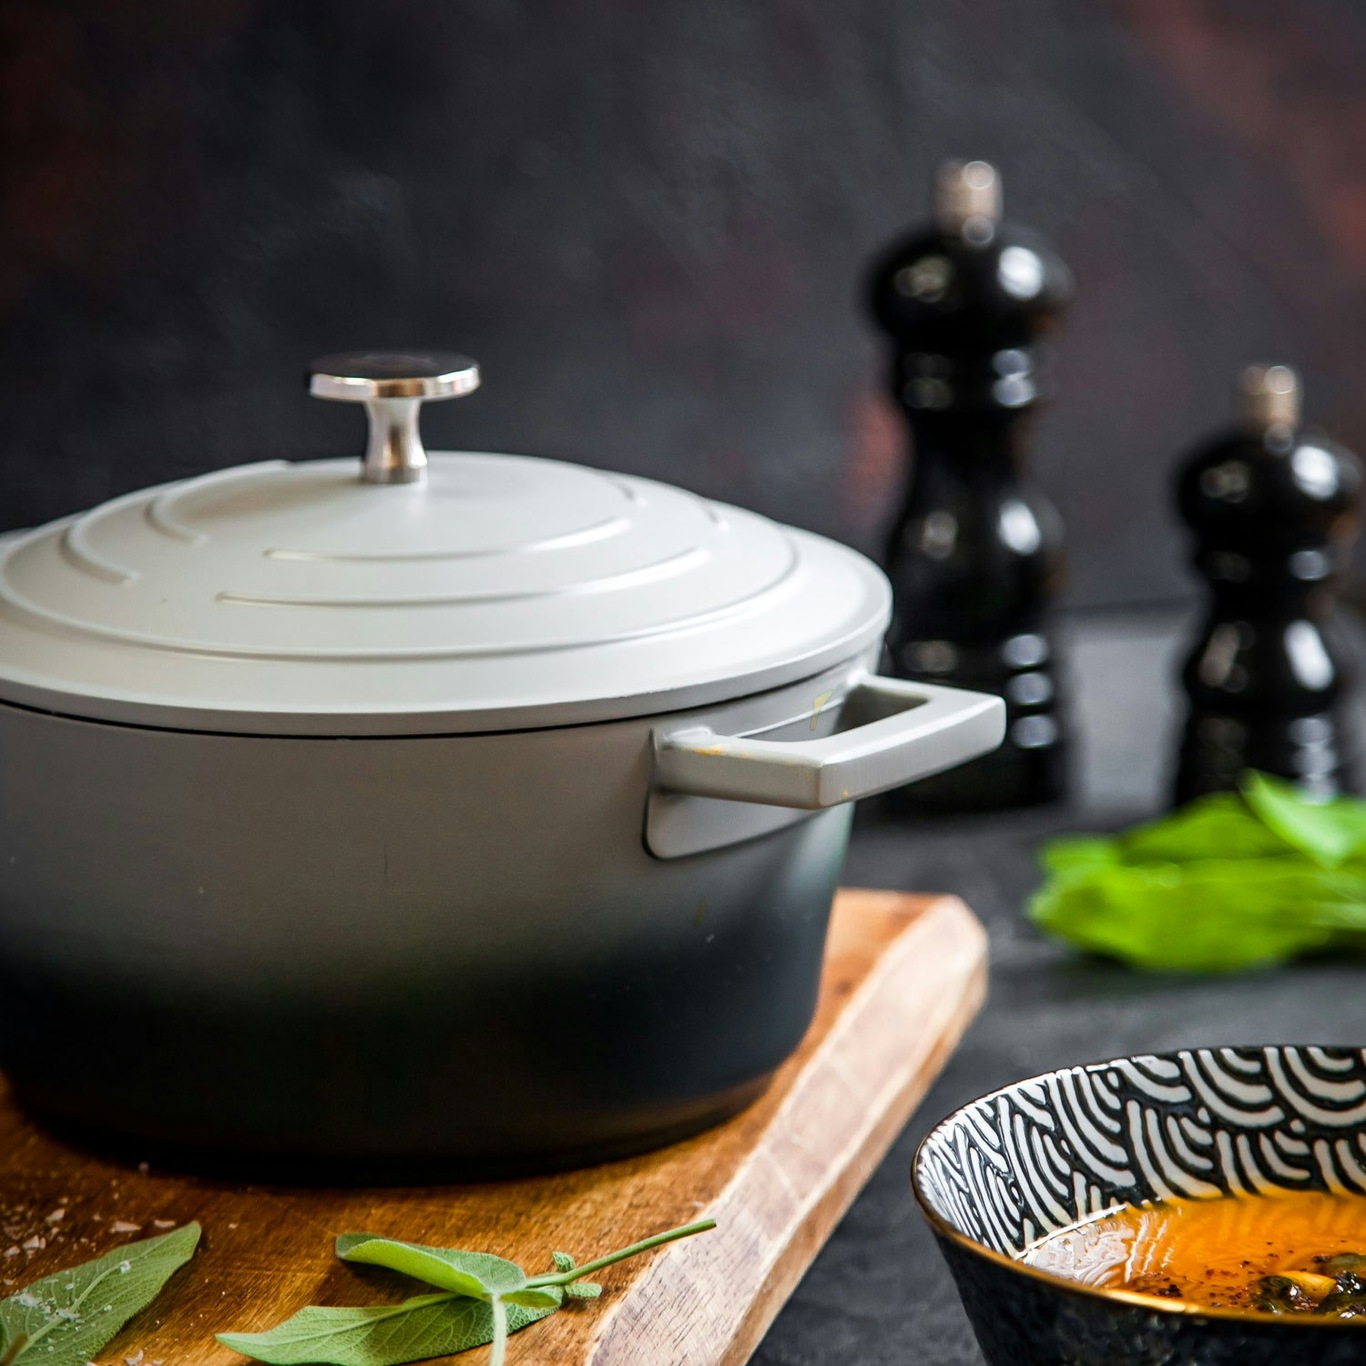 https://royaldesign.com/image/10/kitchen-craft-masterclass-casserole-grey-4?w=800&quality=80